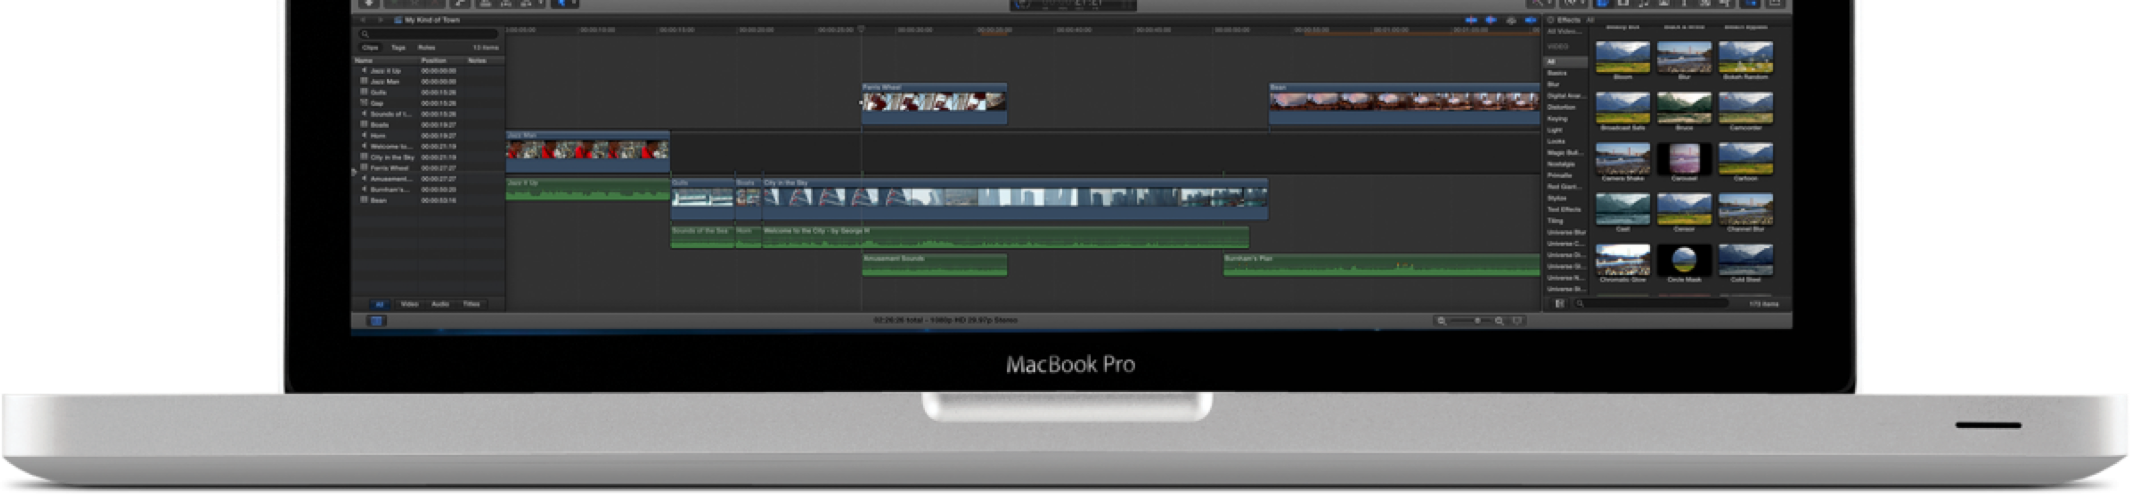 Mac Book Pro Video Editing Setup PNG